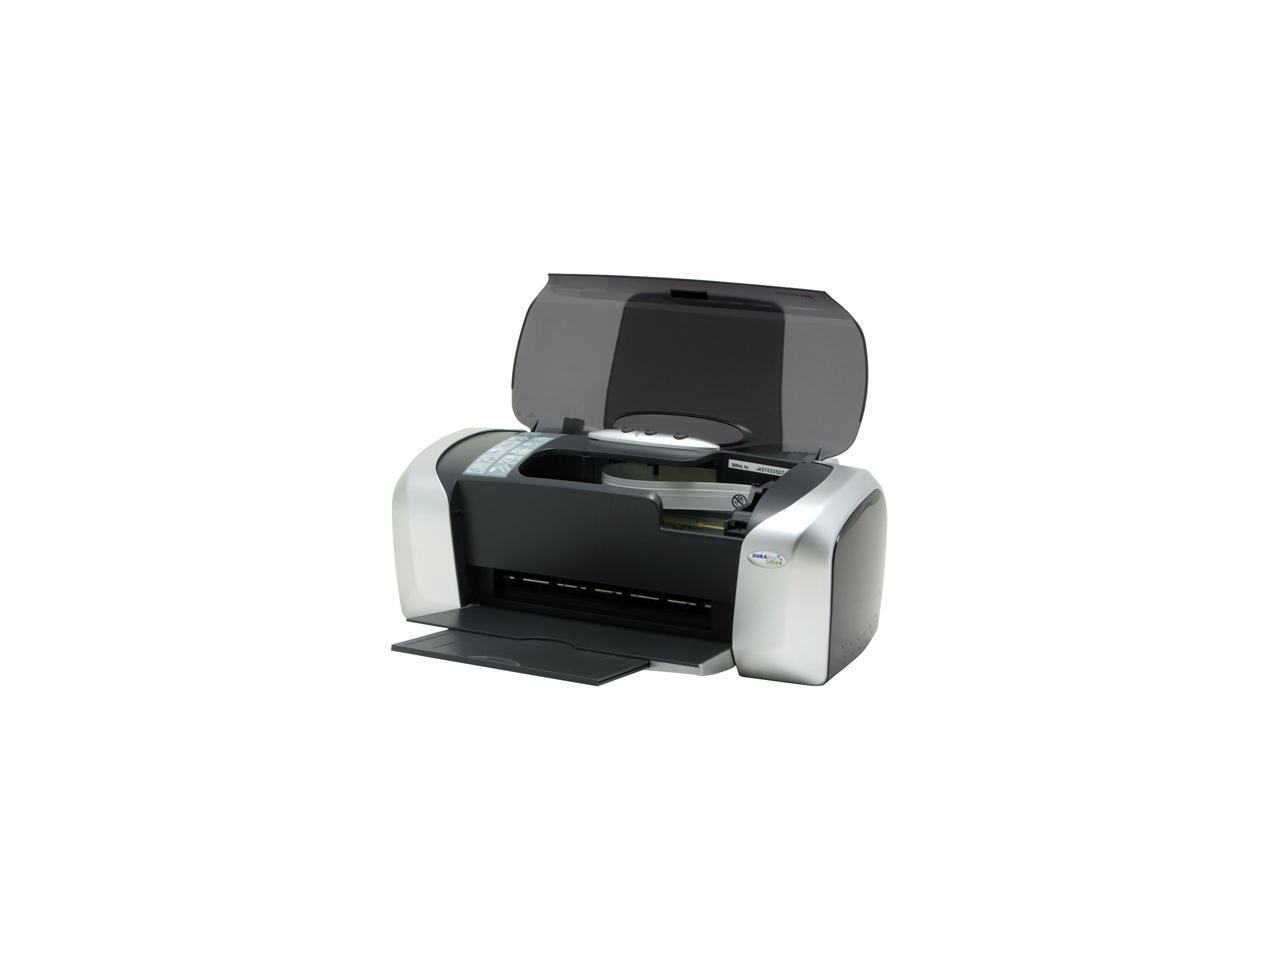 Epson Stylus C88 C11c617121f Inkjet Personal Color Printer Neweggca 5699